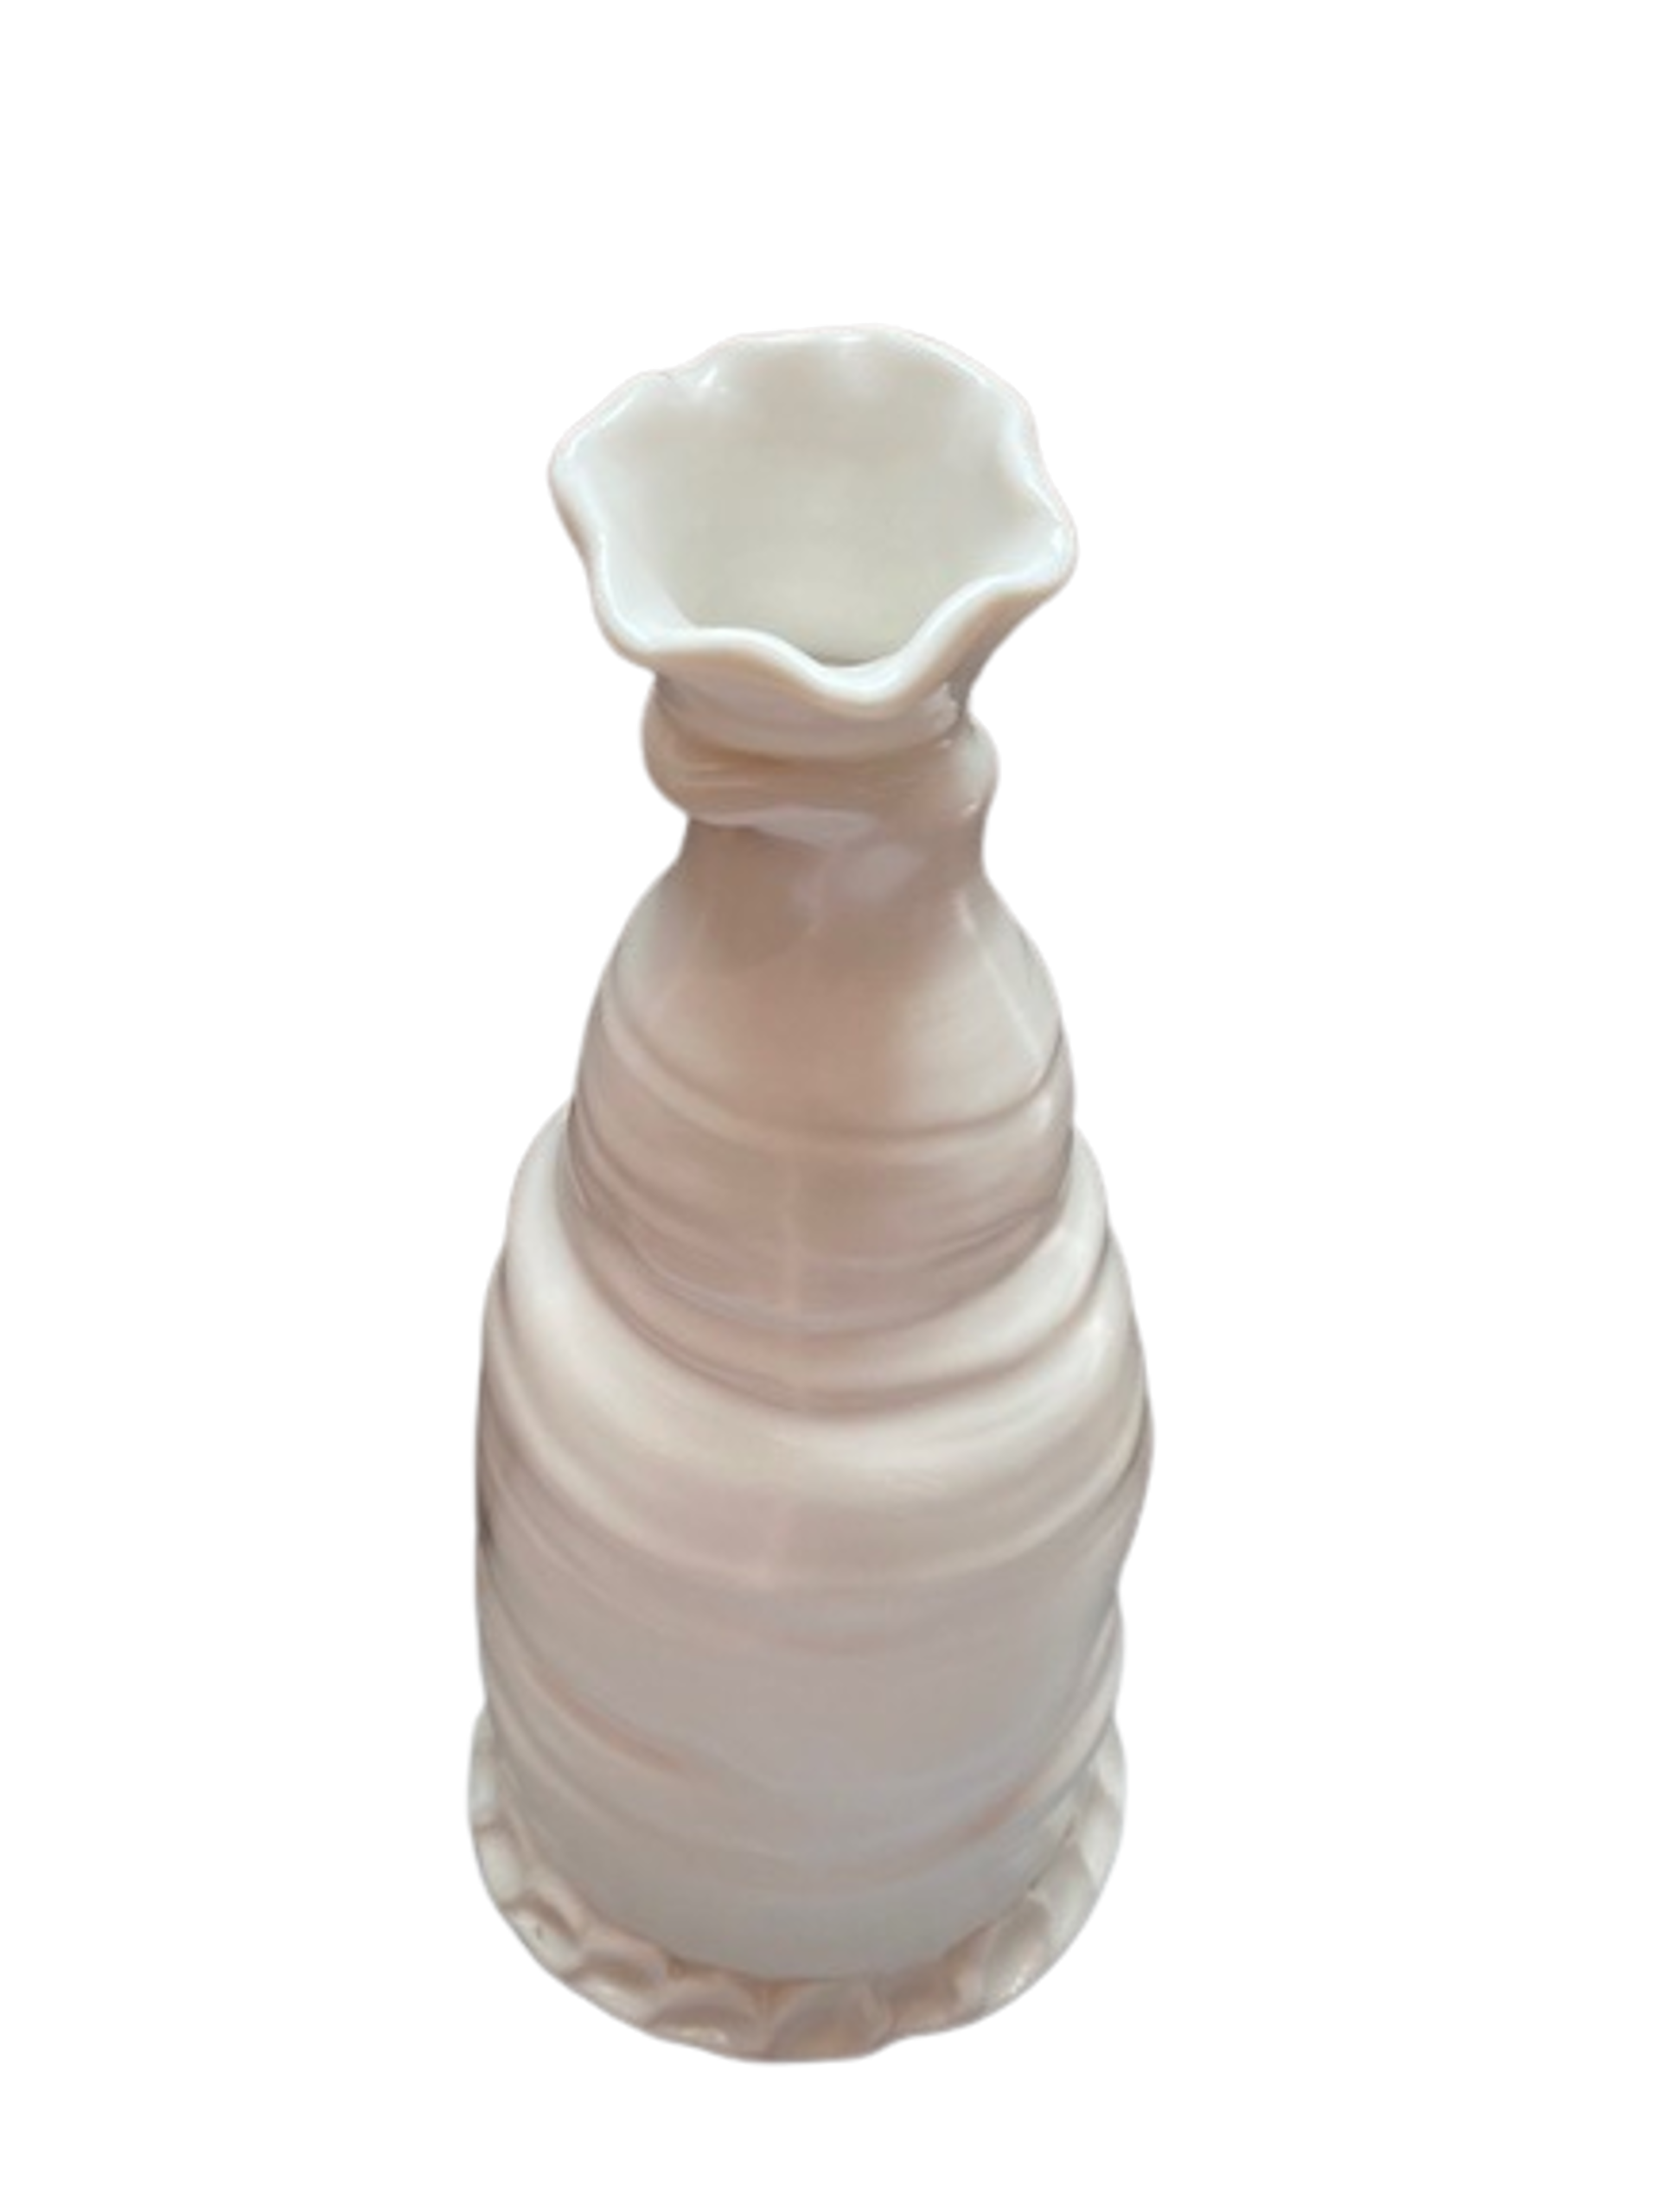 Tipsy Vase II by Maree Nicholson